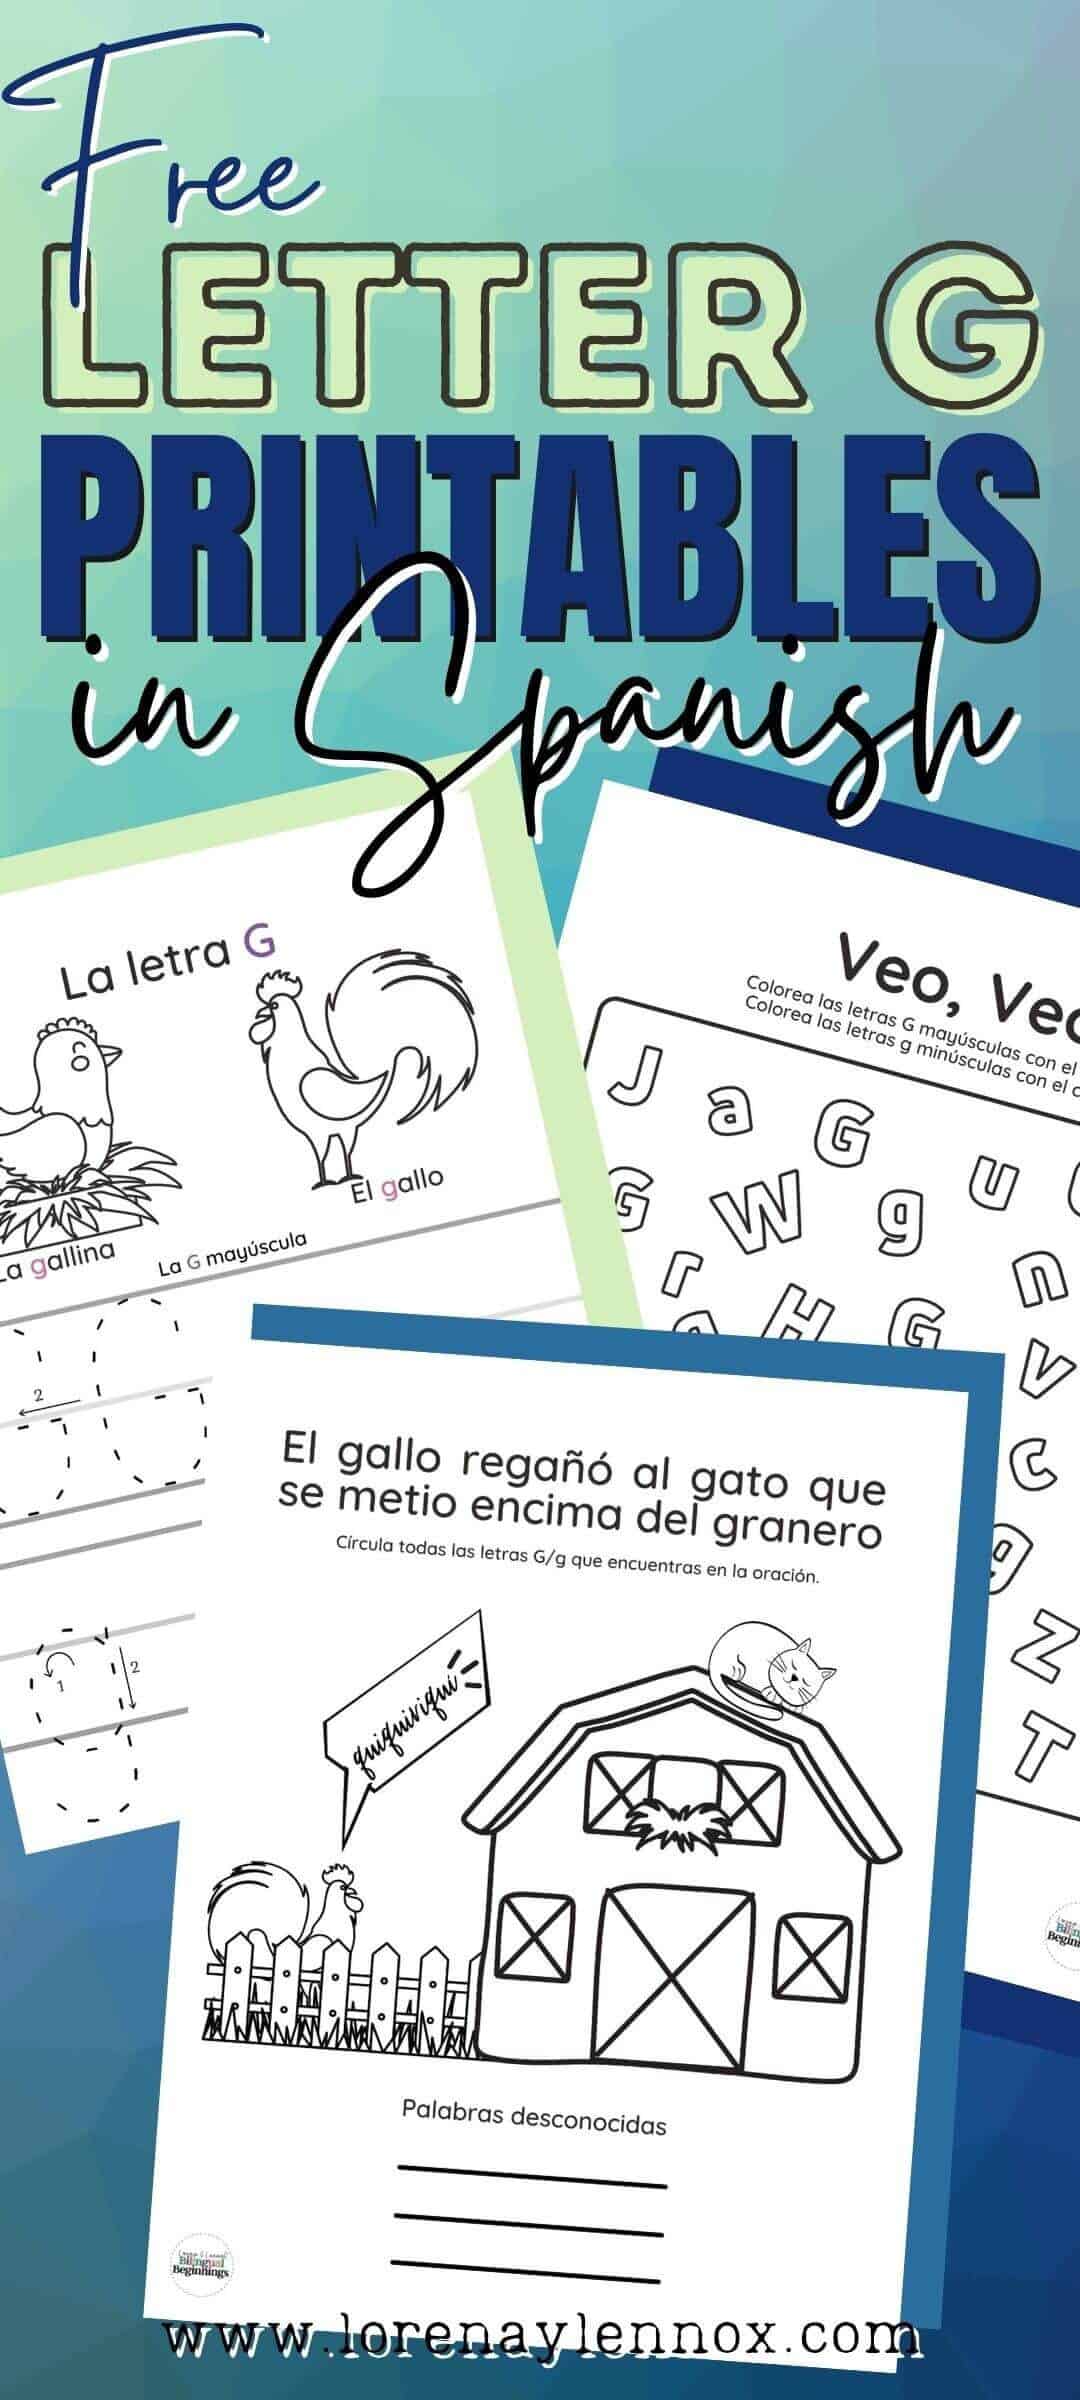 Letter G Printables in Spanish-Free